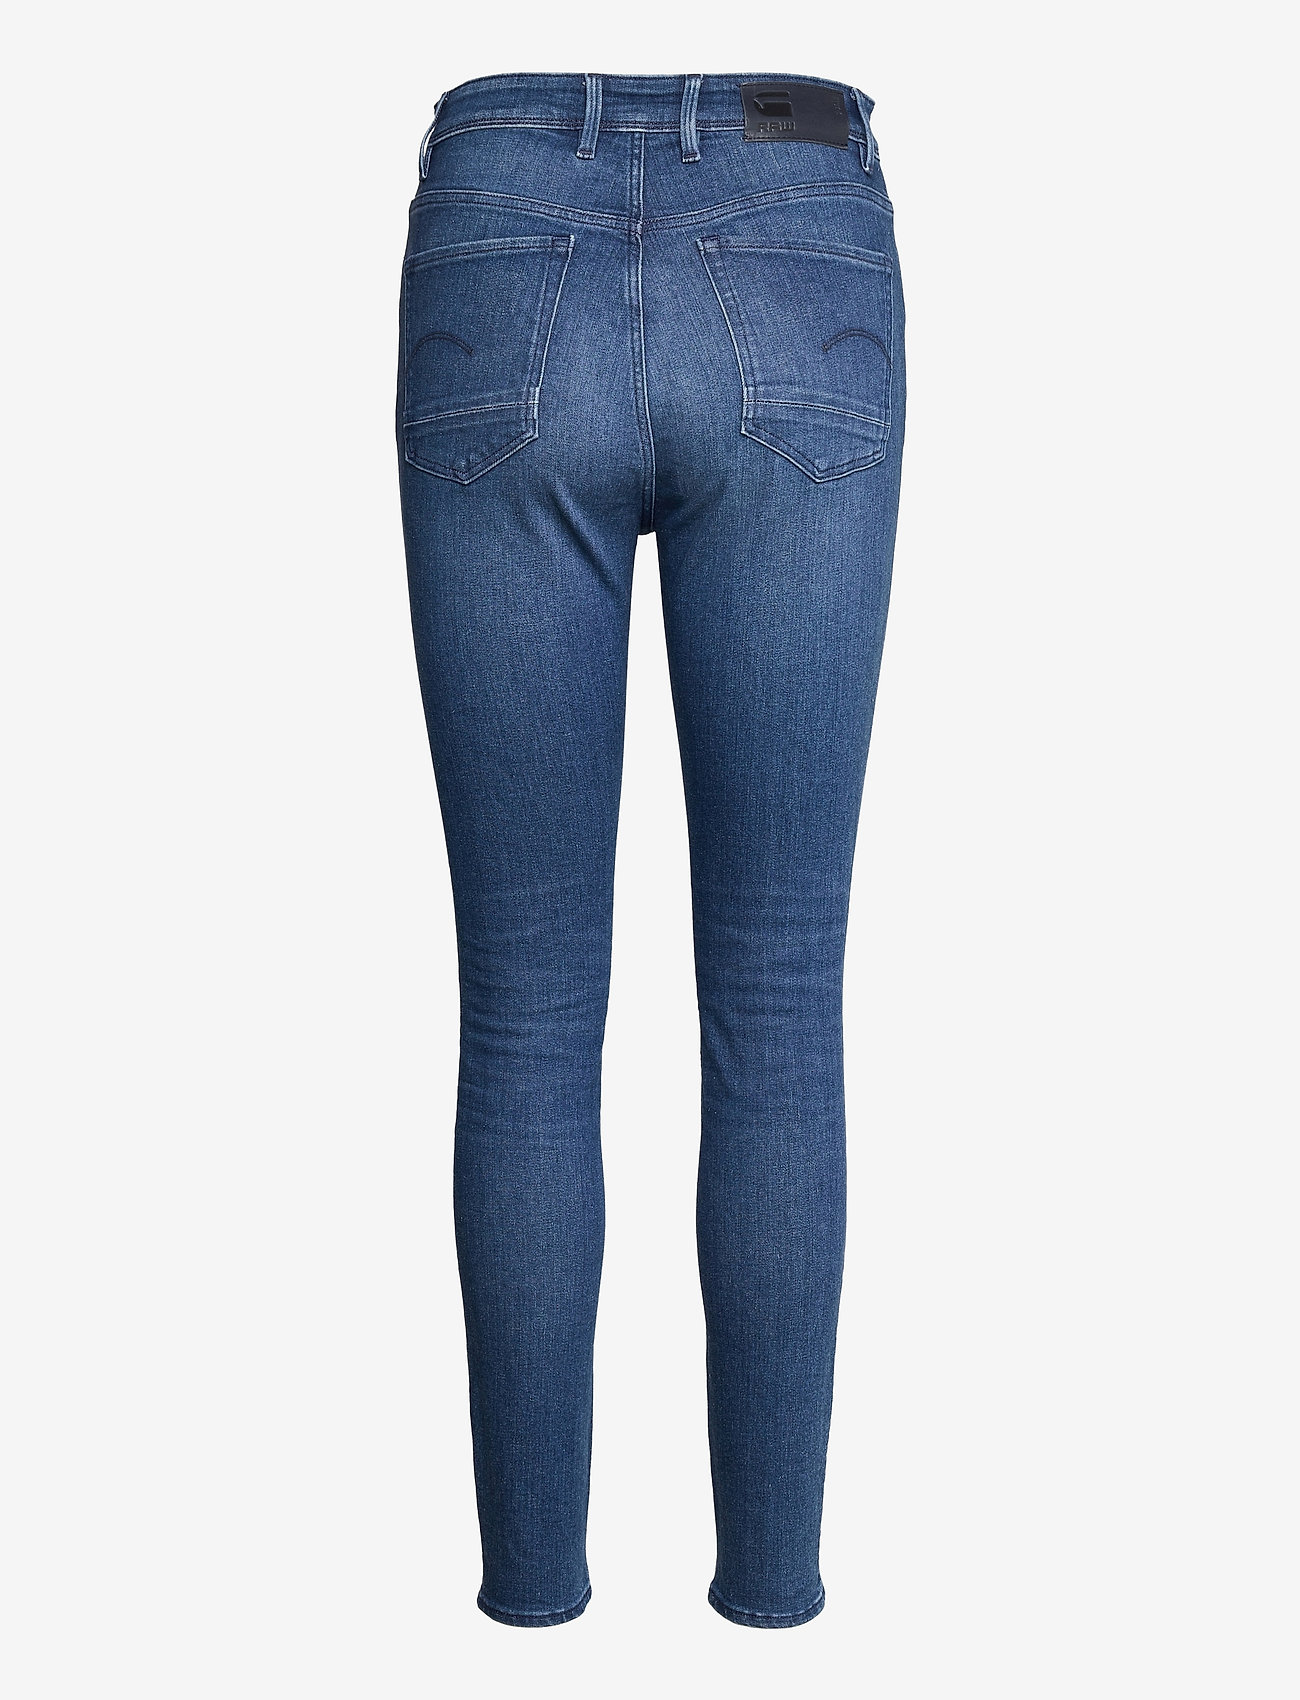 G-Star RAW - Kafey Ultra High Skinny - skinny jeans - faded neptune blue - 1